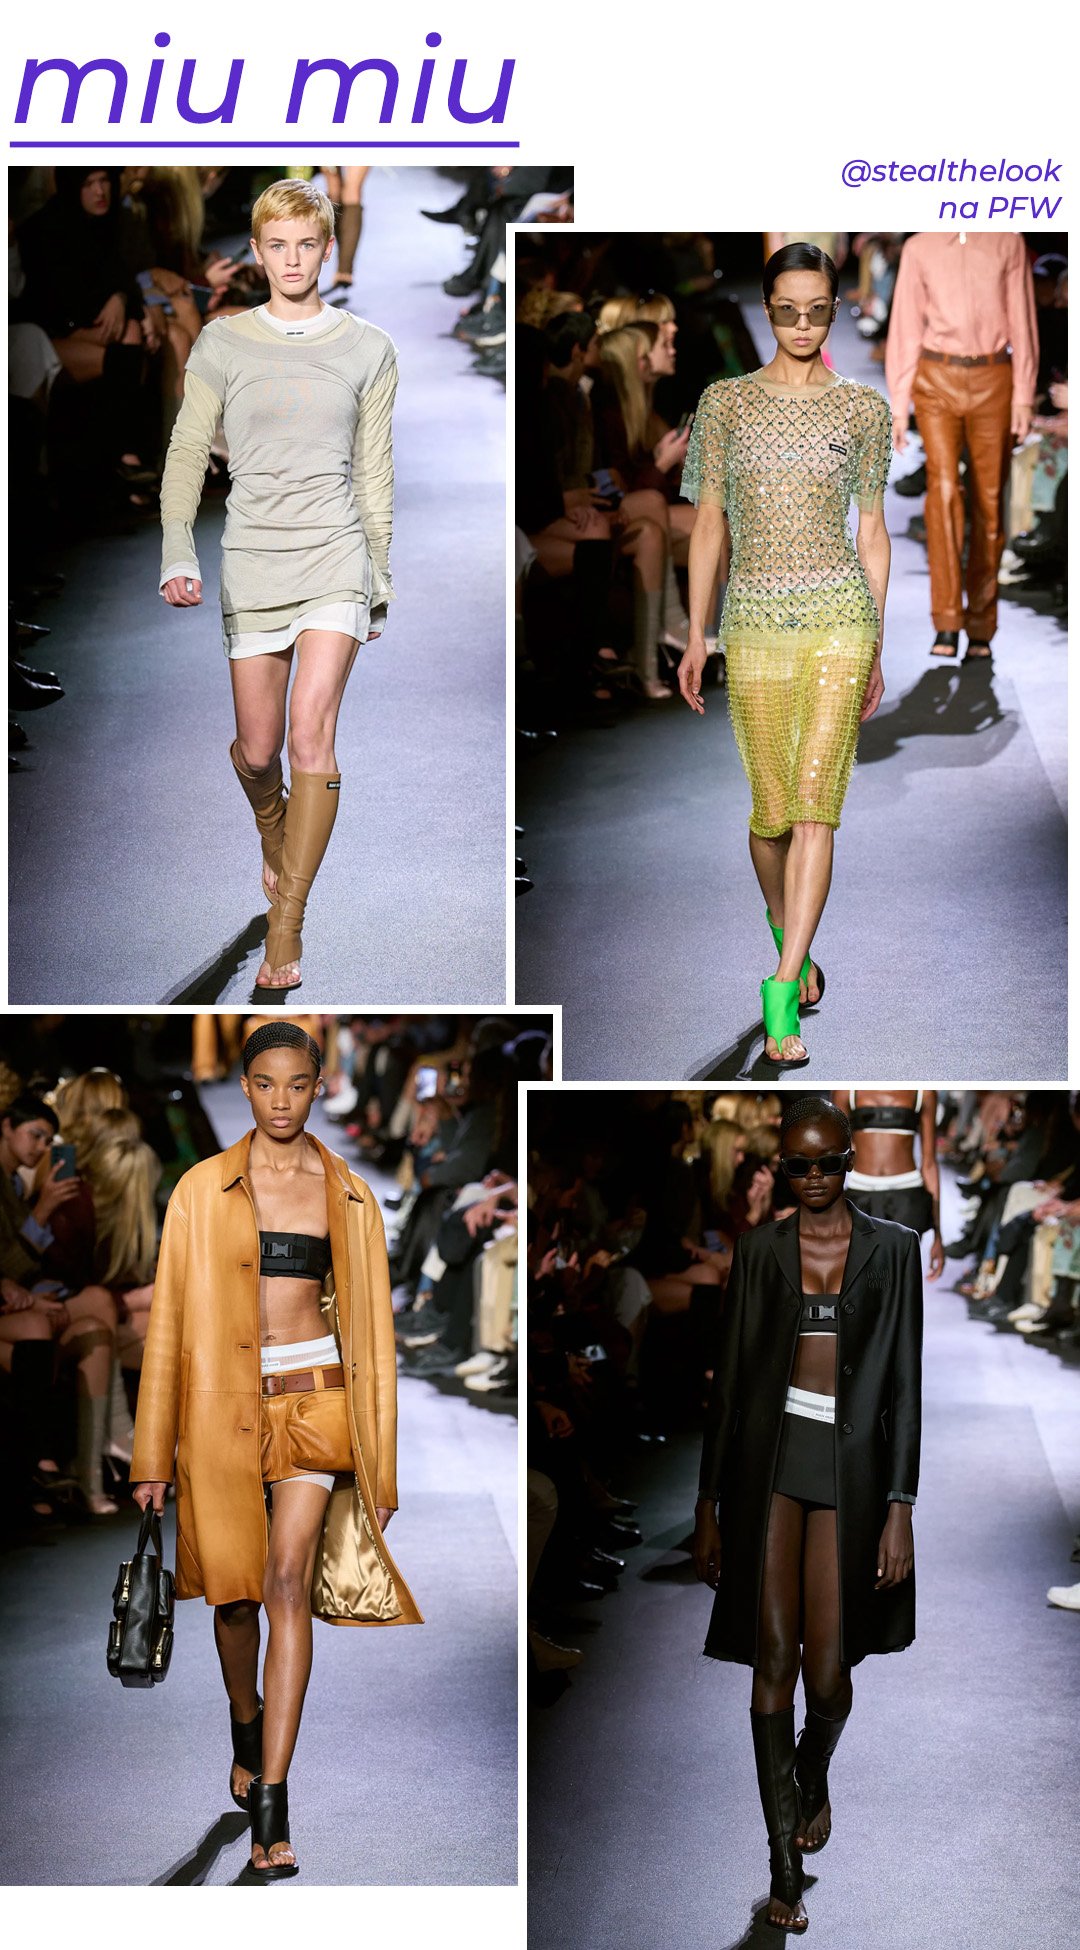 Miu Miu S/S 2023 - roupas diversas - Paris Fashion Week - Primavera - modelo andando pela passarela - https://stealthelook.com.br